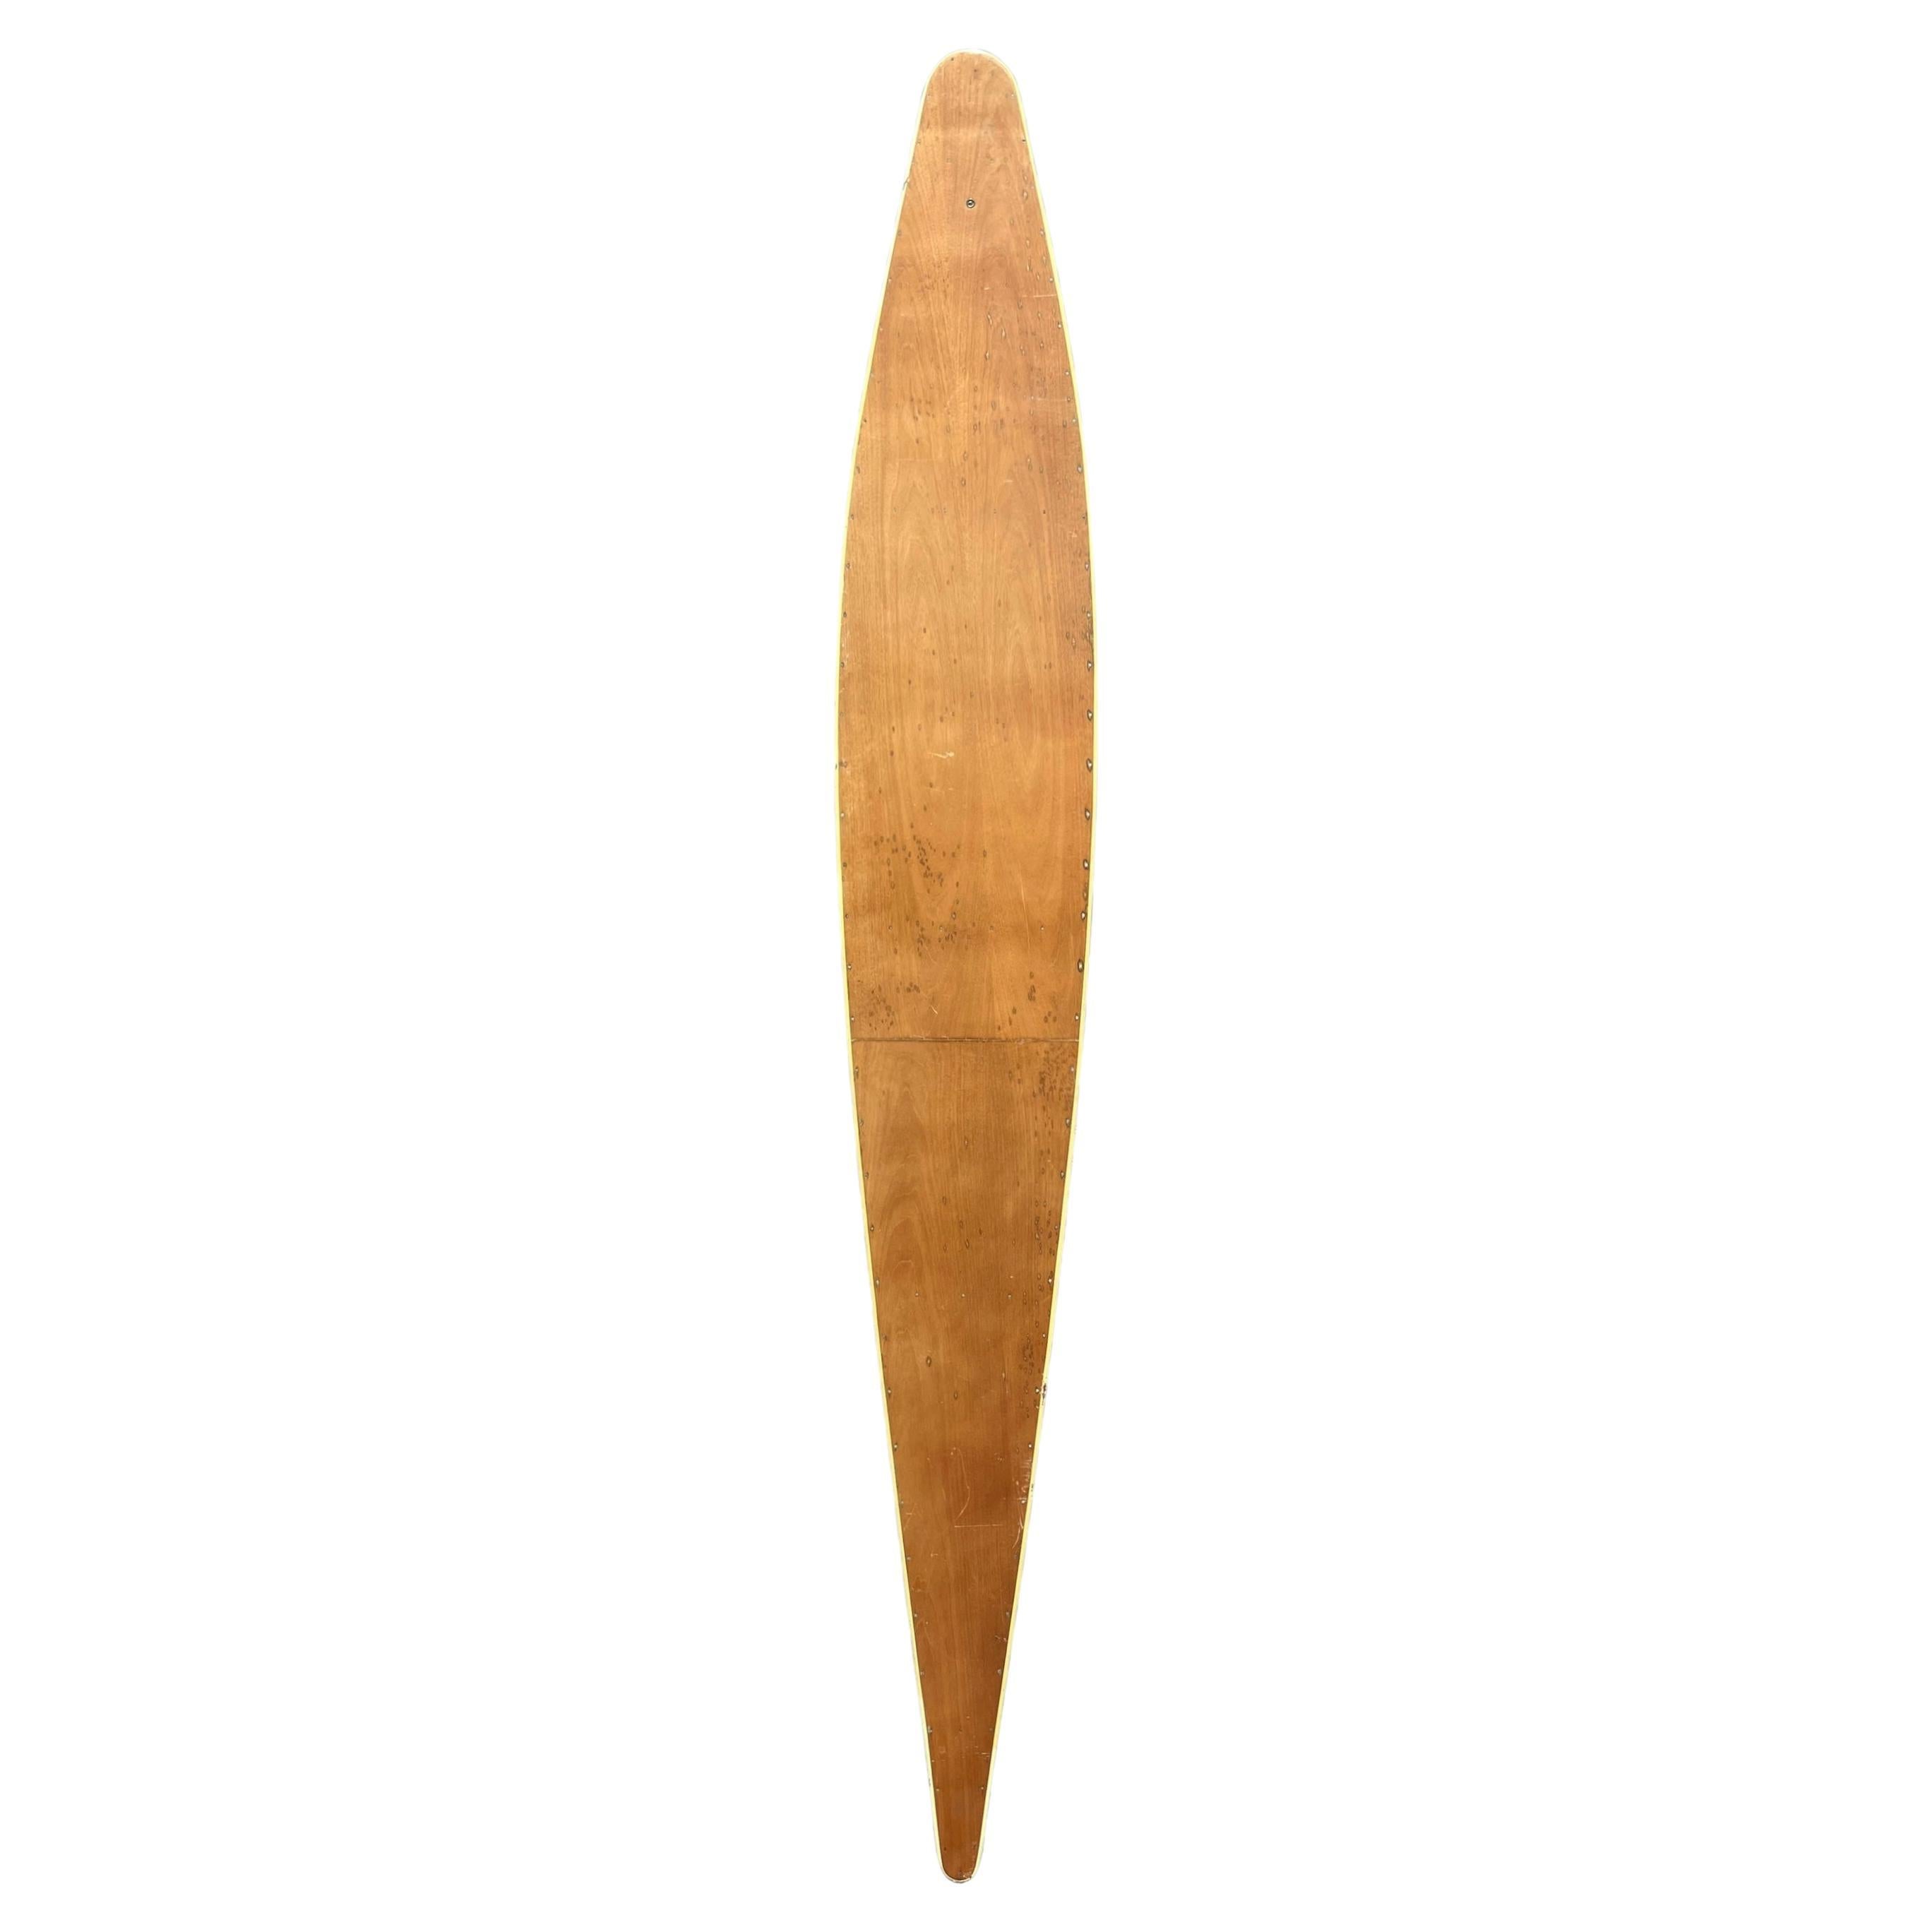 1930s Replica Tom Blake hollow wooden surfboard